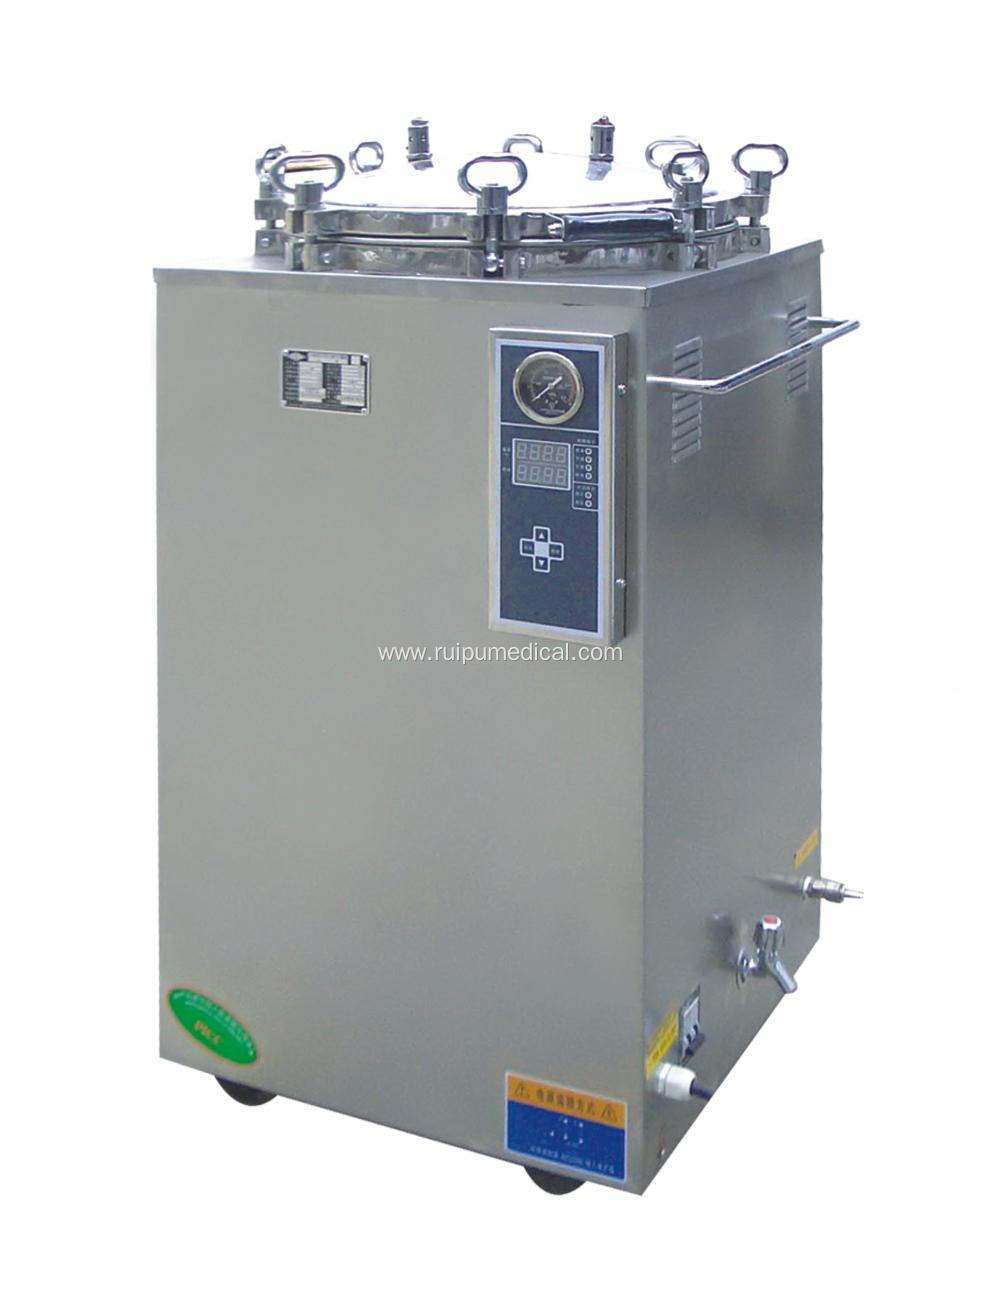 Digital Display Automation Verticl Pressure Steam Sterilizer